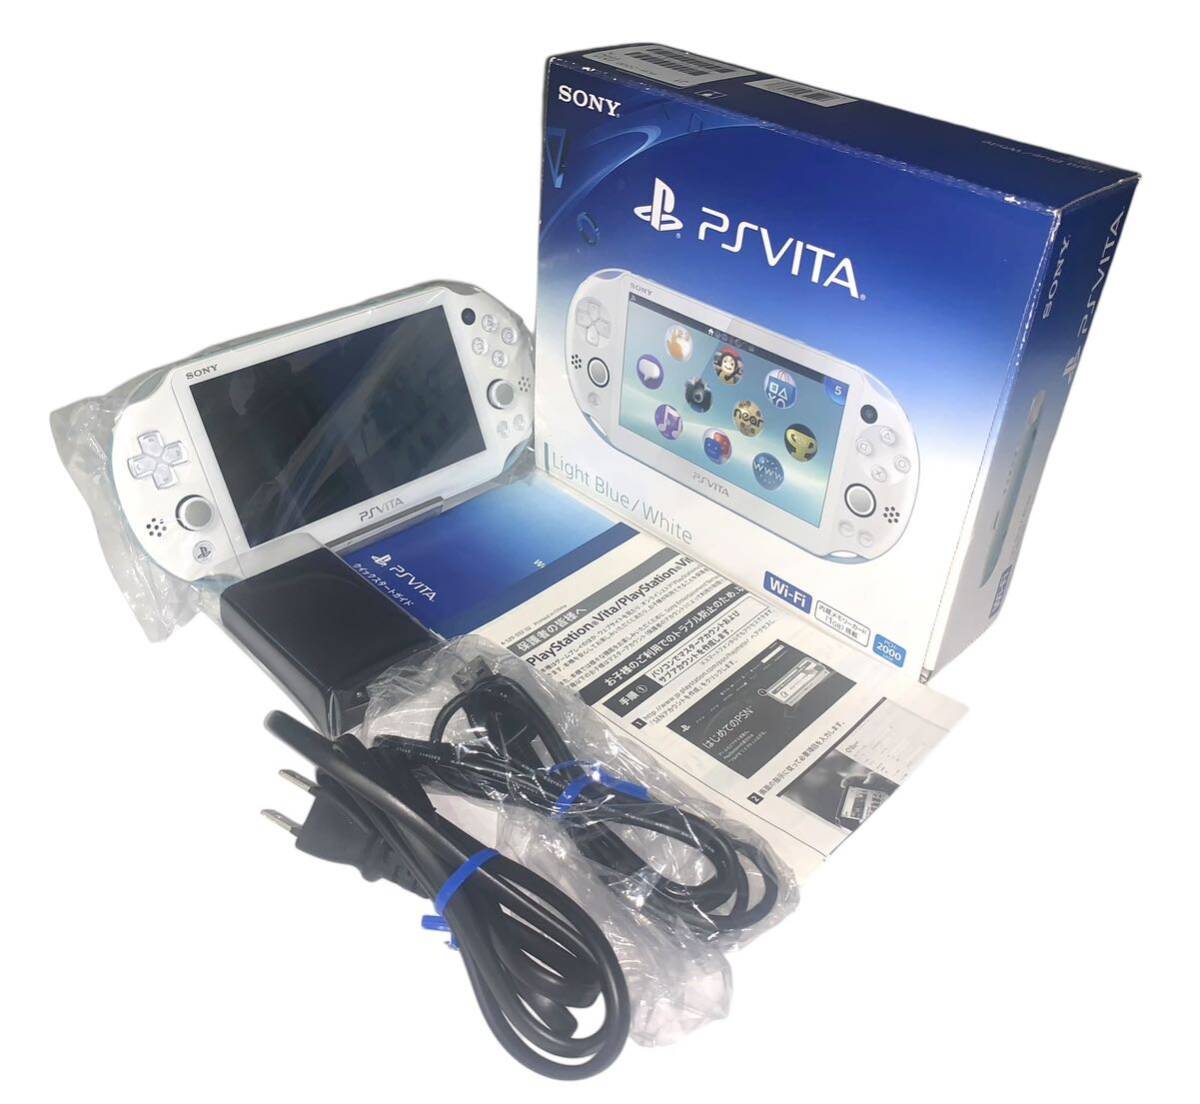 PSVITA body light blue PlayStation Vita